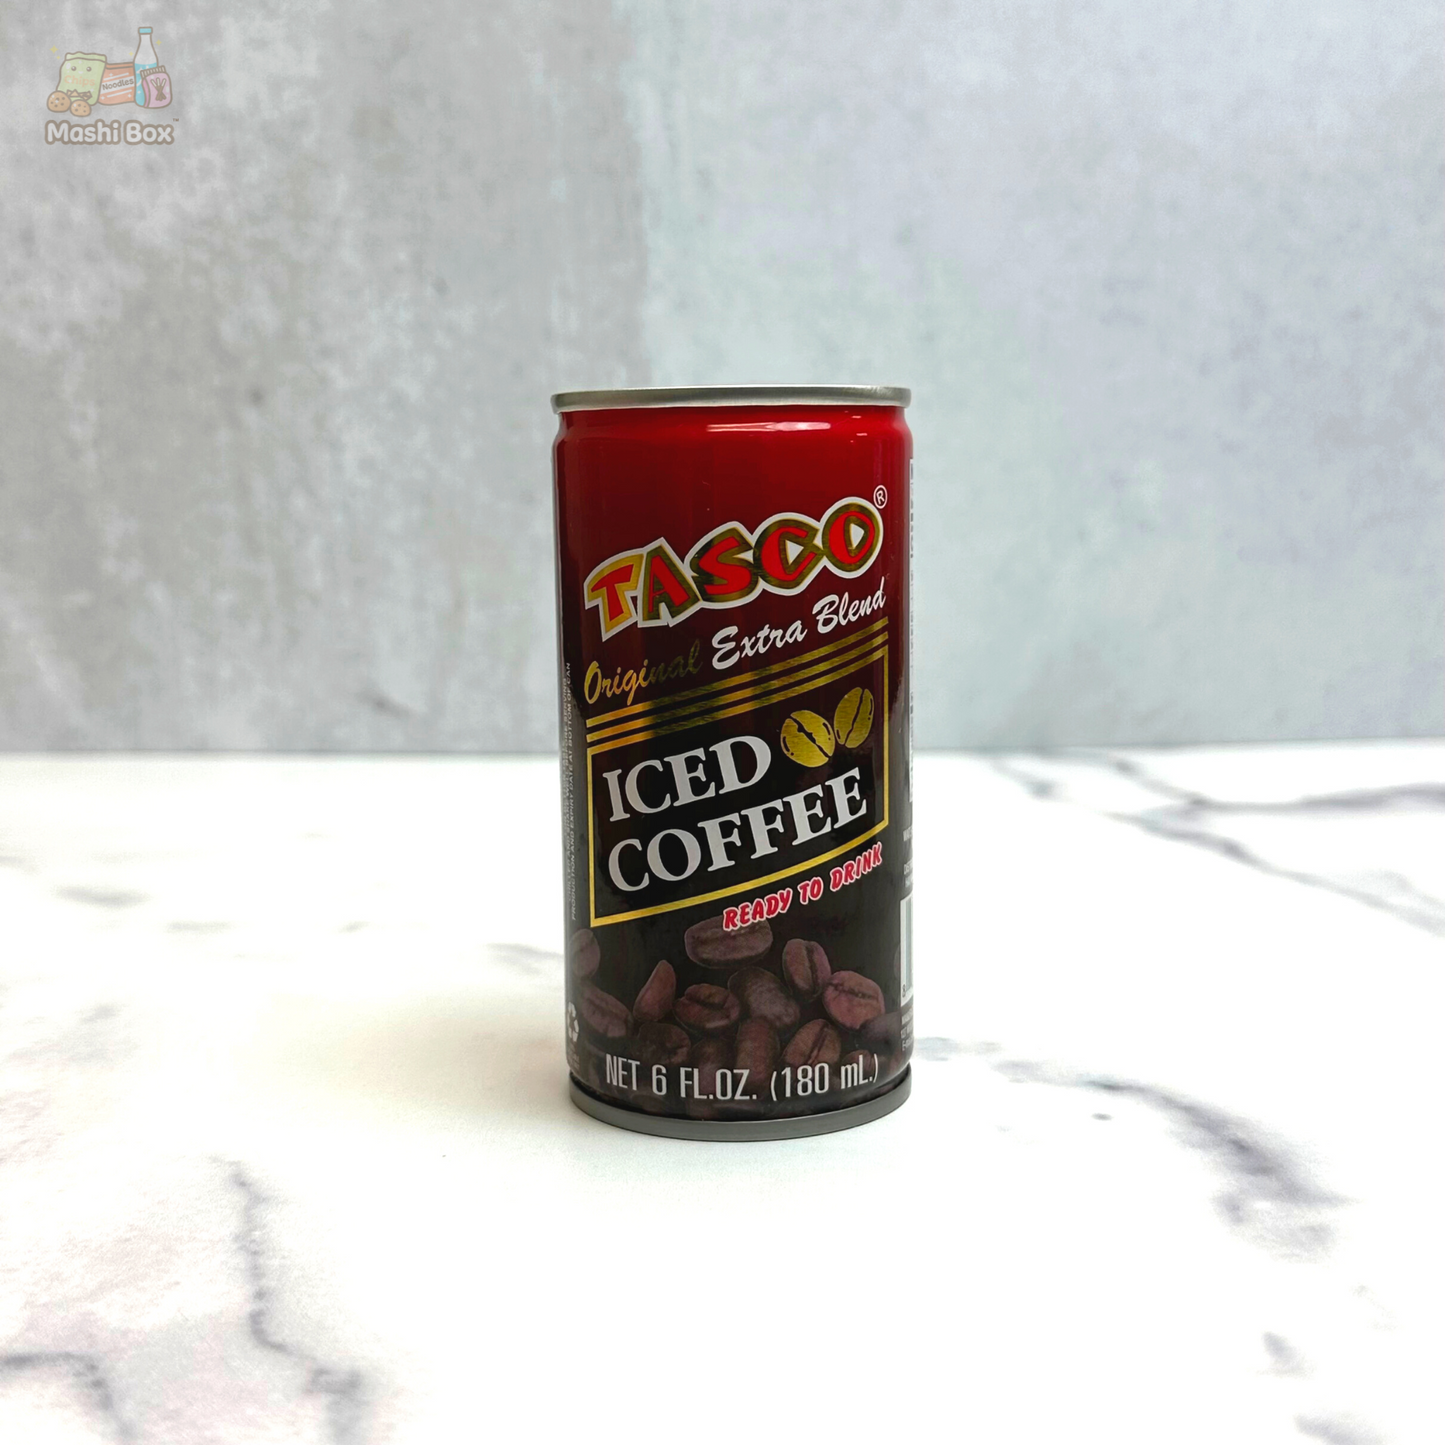 Tasco Original Extra Blend Iced Coffee